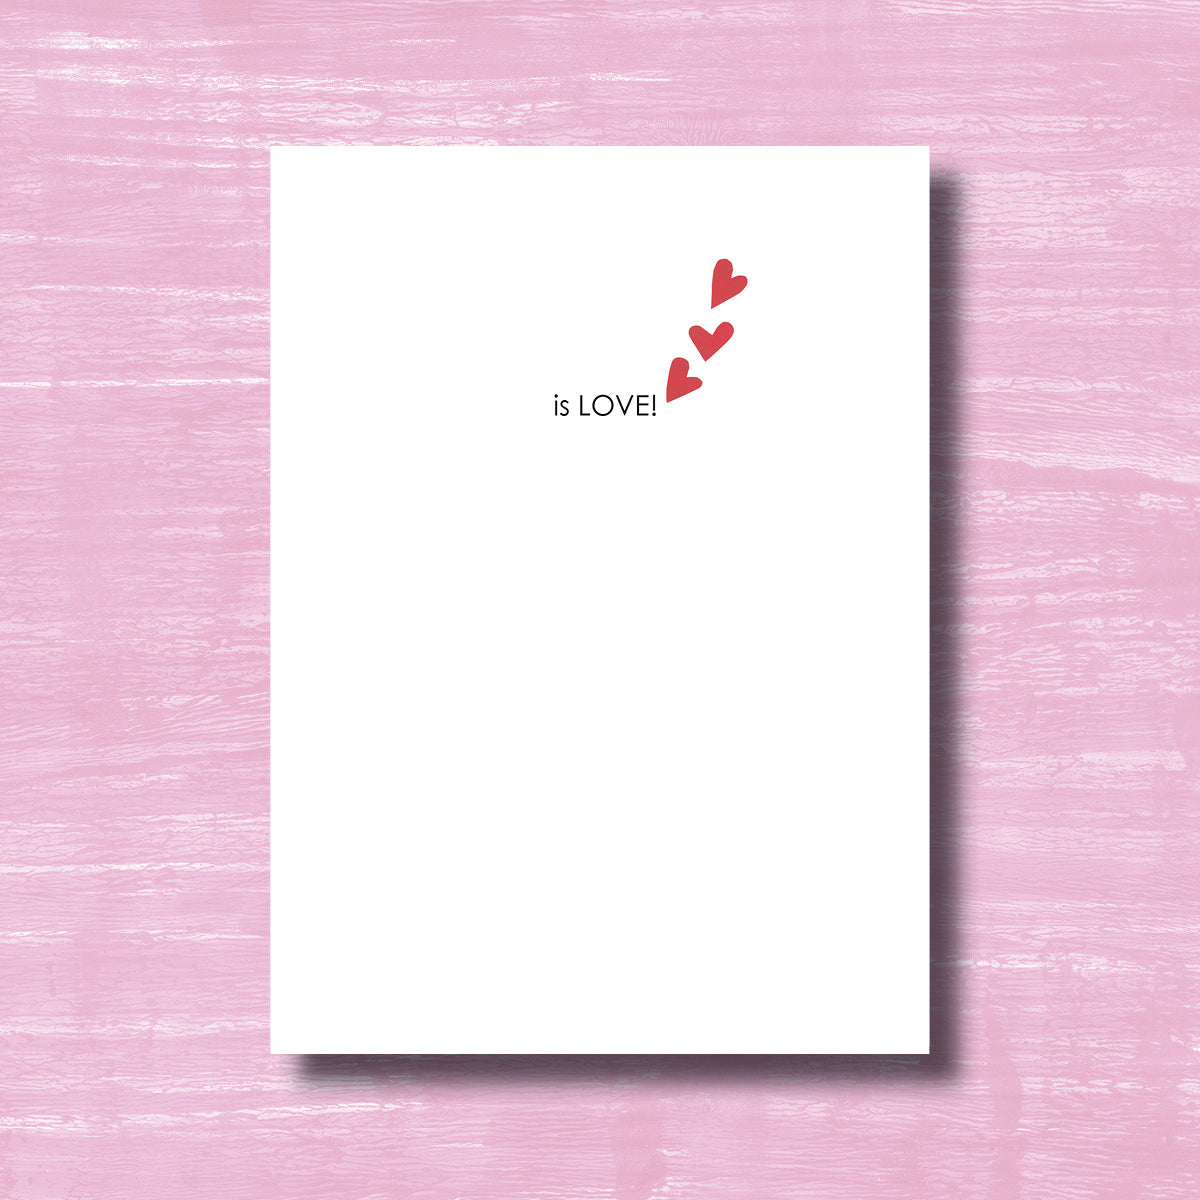 Love it Love - Greeting Card